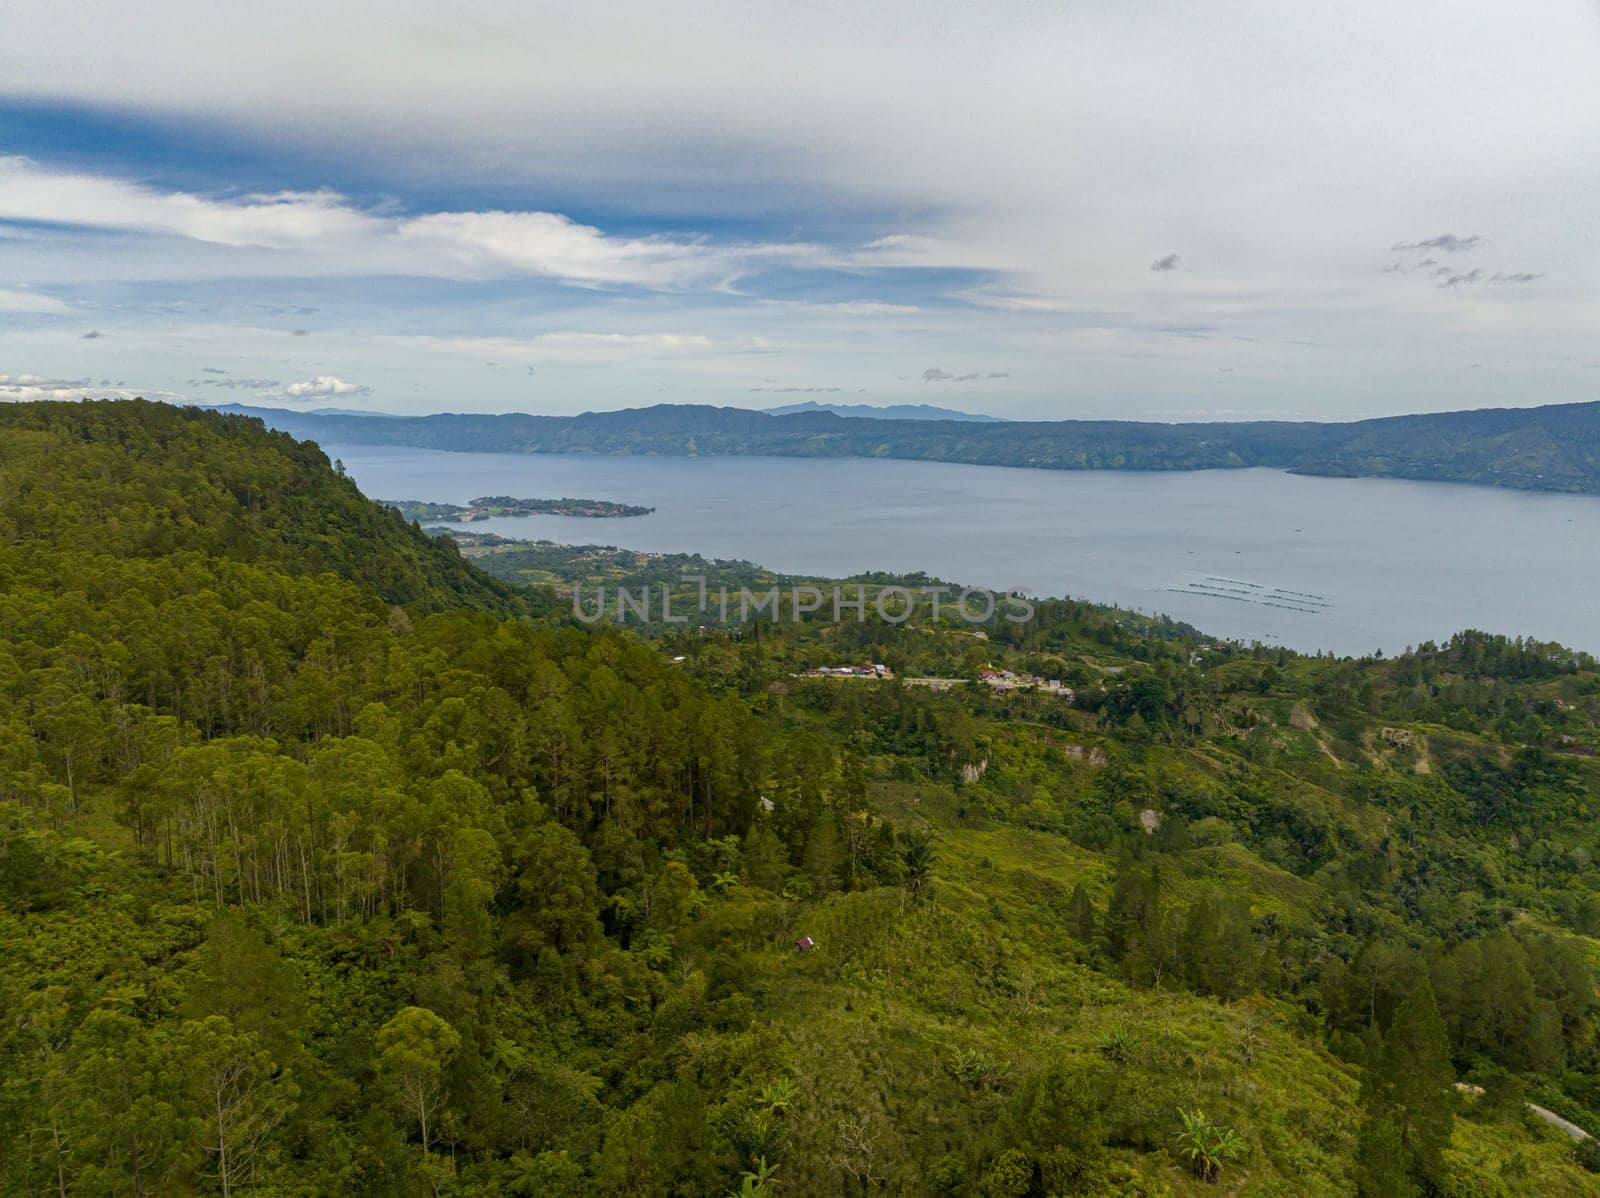 Samosir Island and Lake Toba in Sumatra. Tropical landscape. Indonesia.